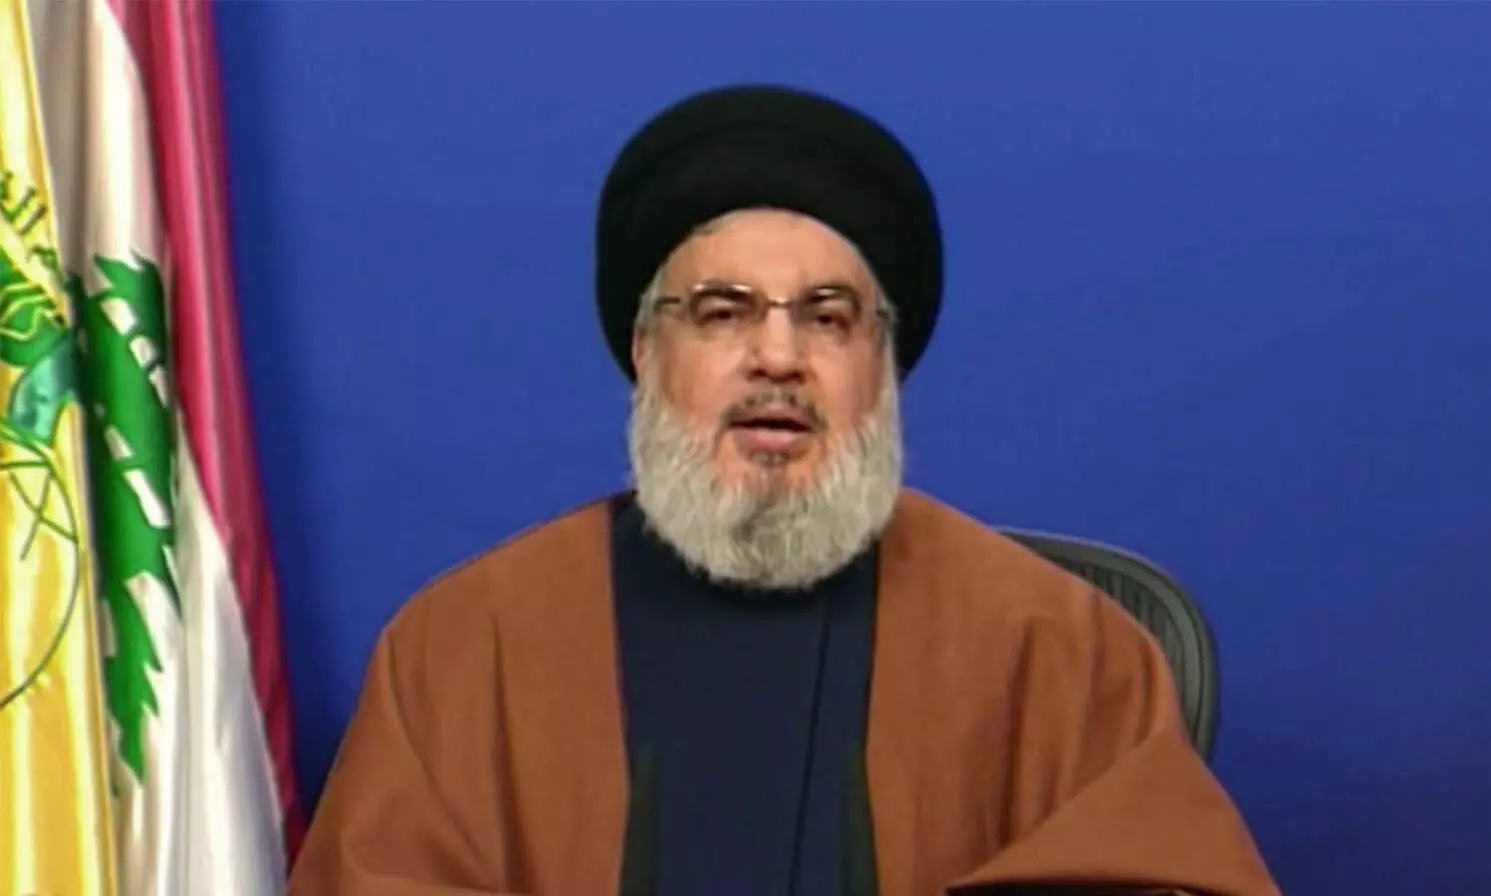 Hezbollah gave Kornet Missiles to Gaza at the behest of Qassim Soleimani: Nasrallah